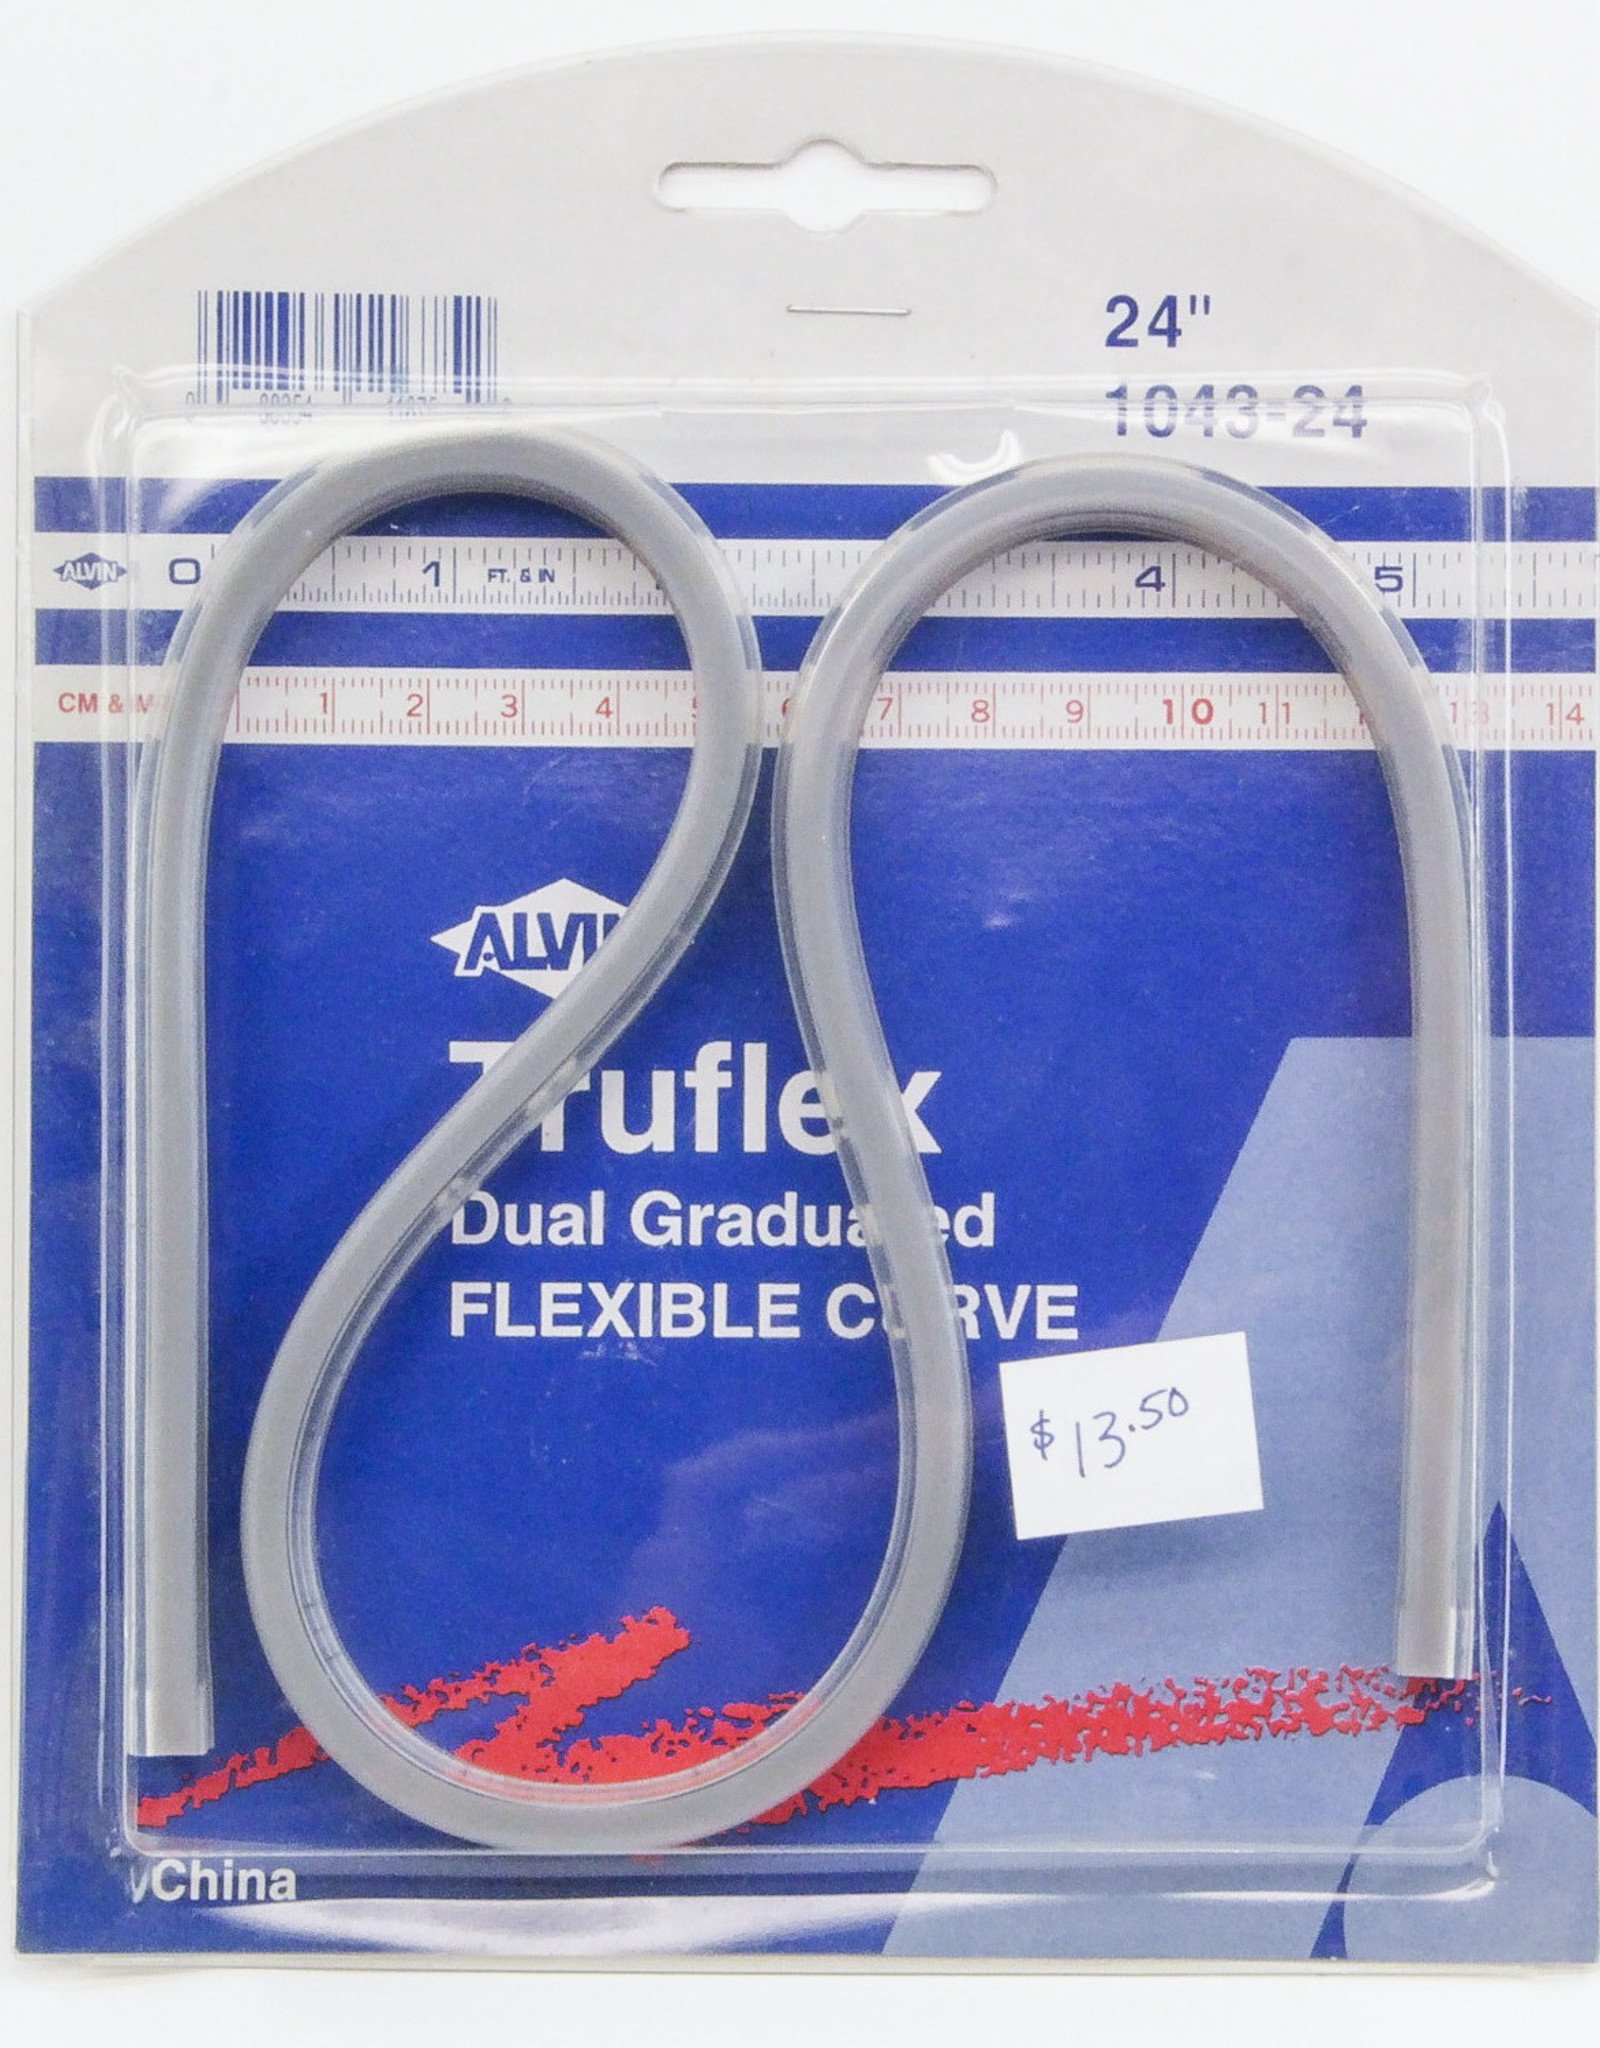 Truflex, Dual Graduated Flexible Curve, Alvin Brand, 24"